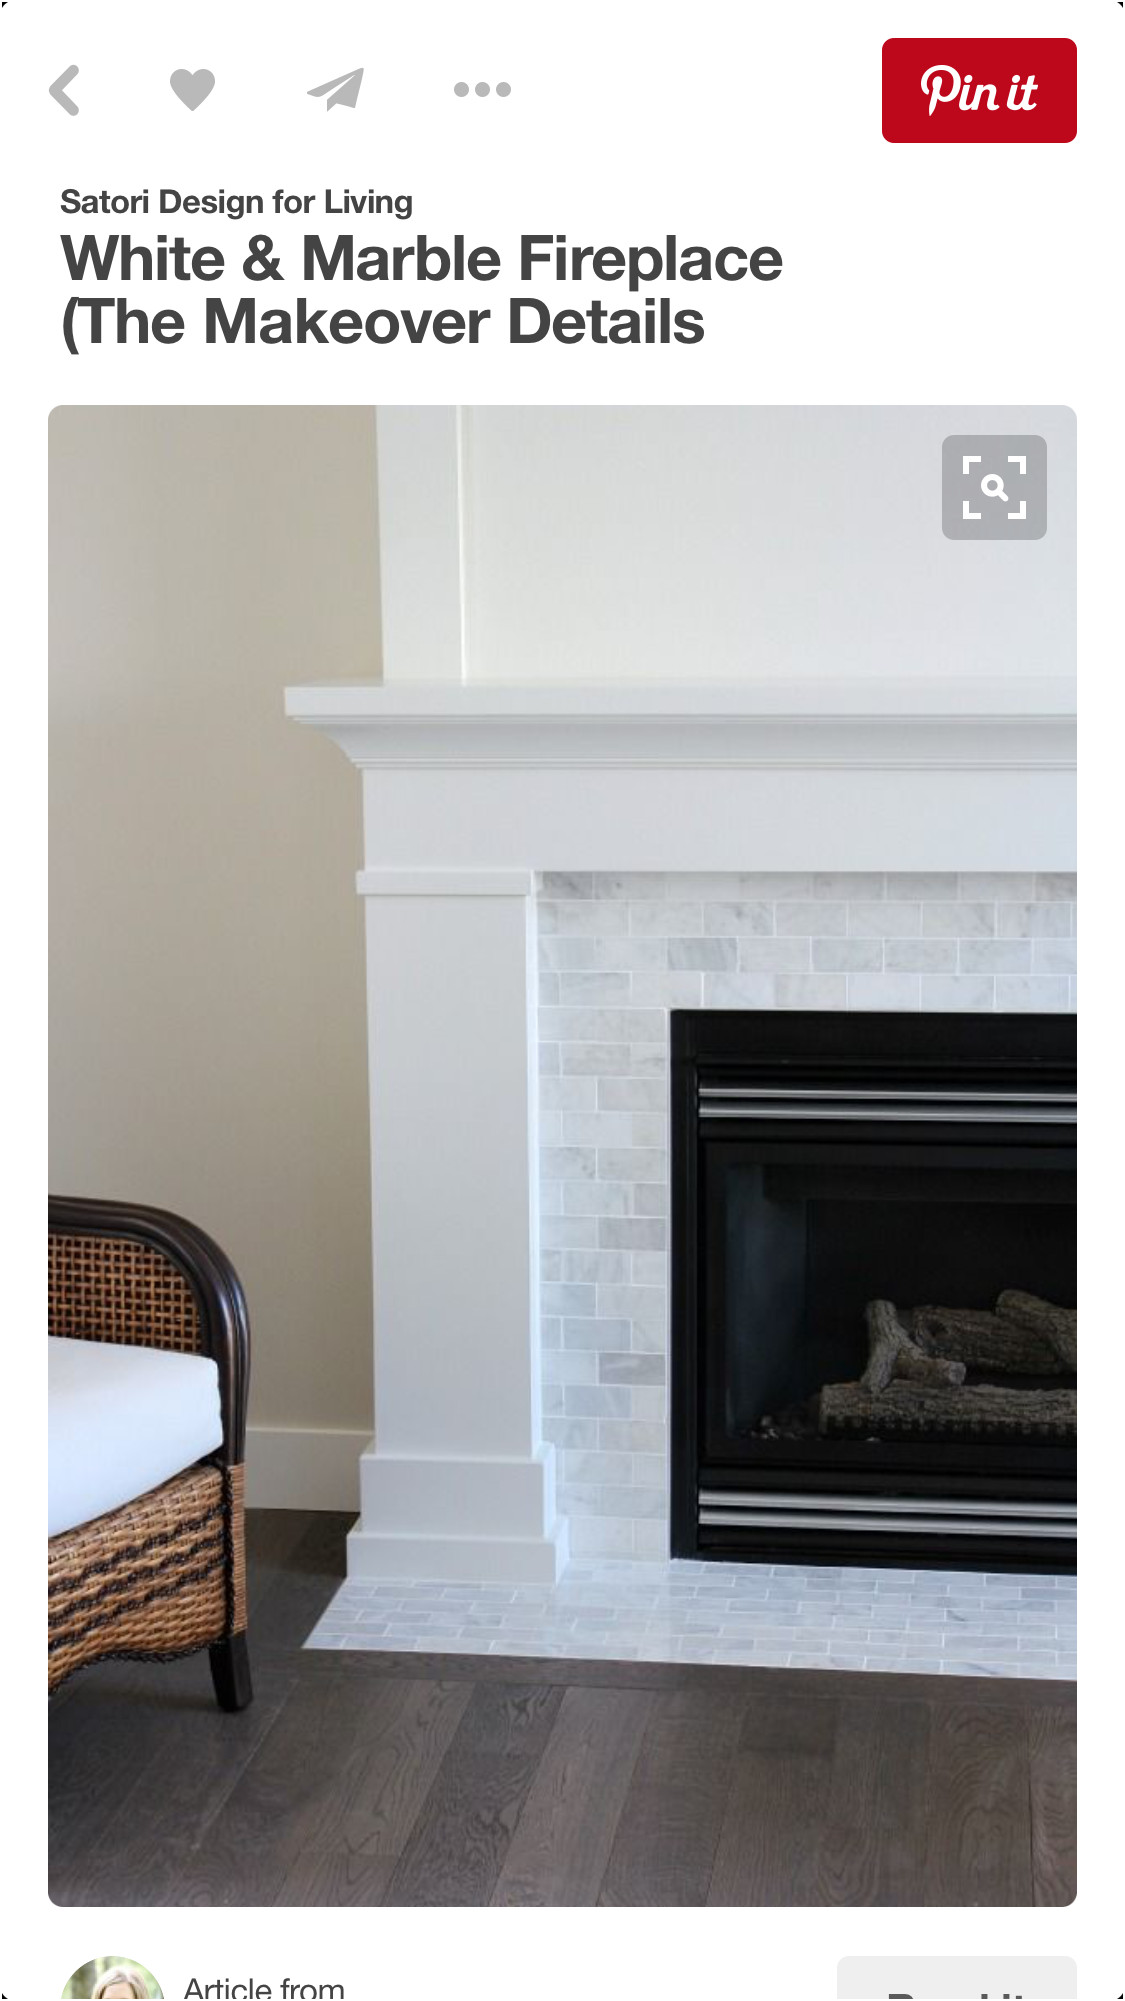 Luxury Fireplace Tile Ideas